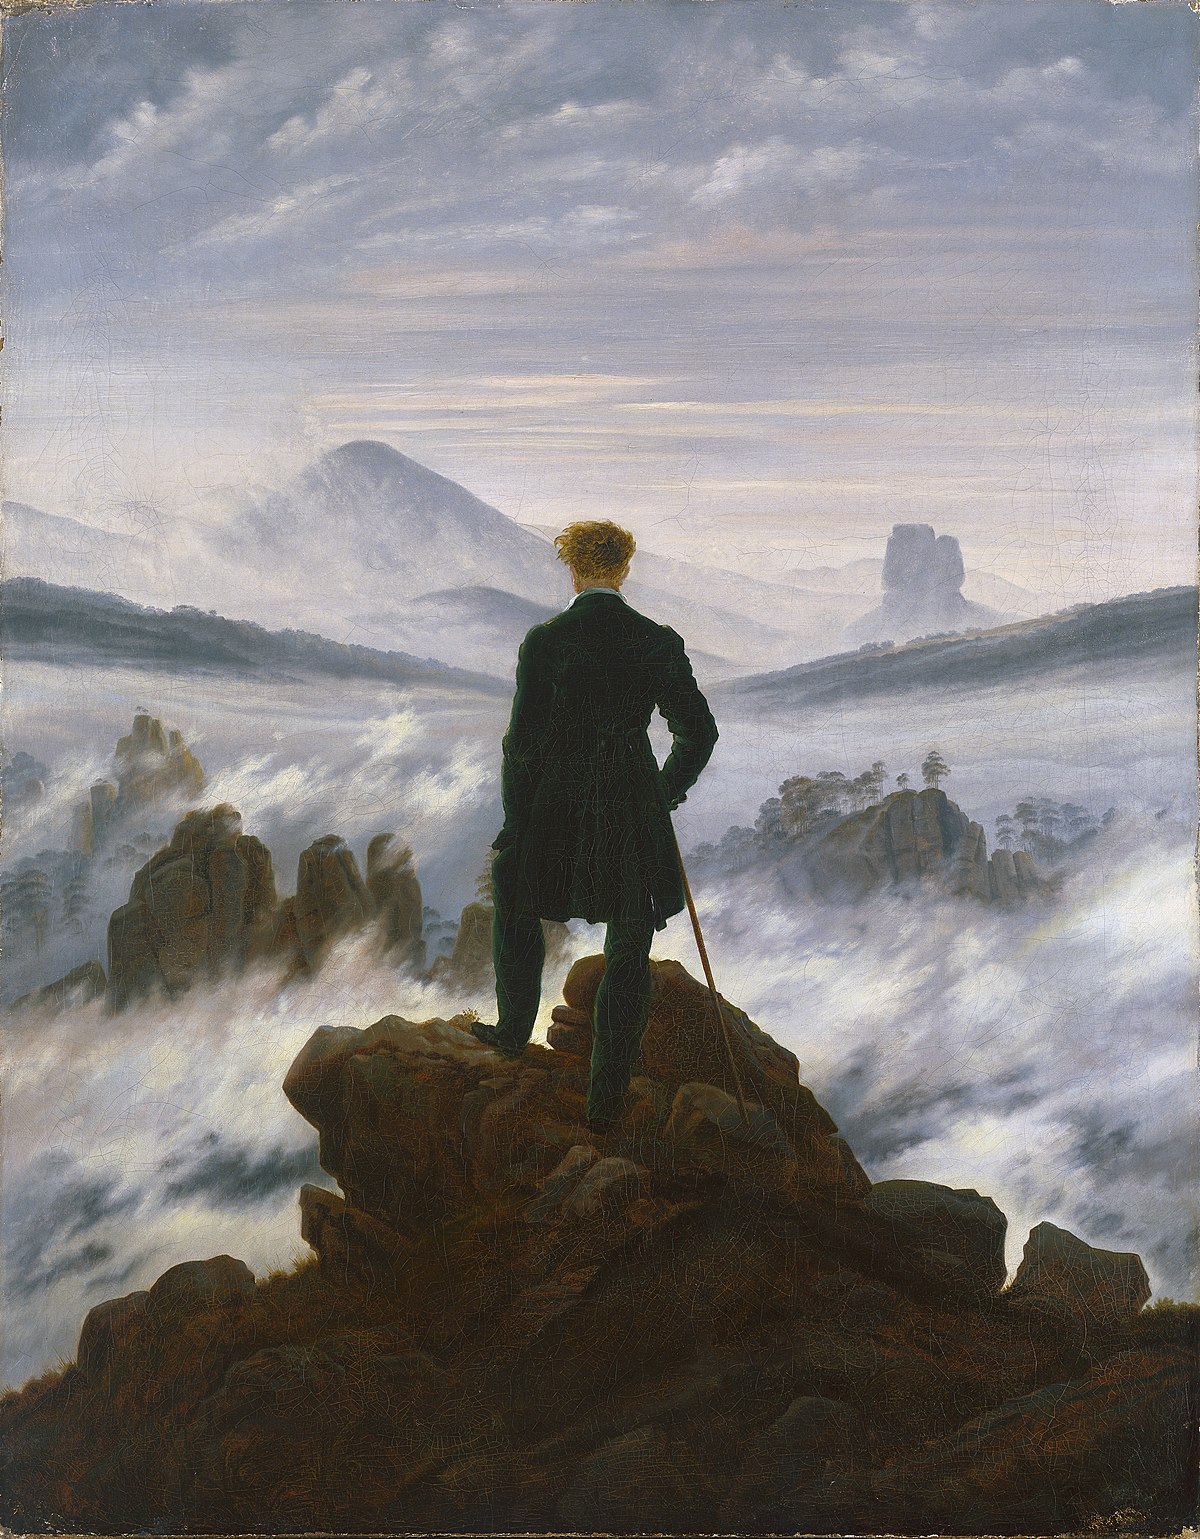 Casper David Friedrich "Wanderer above the Sea of Fog" (1818)